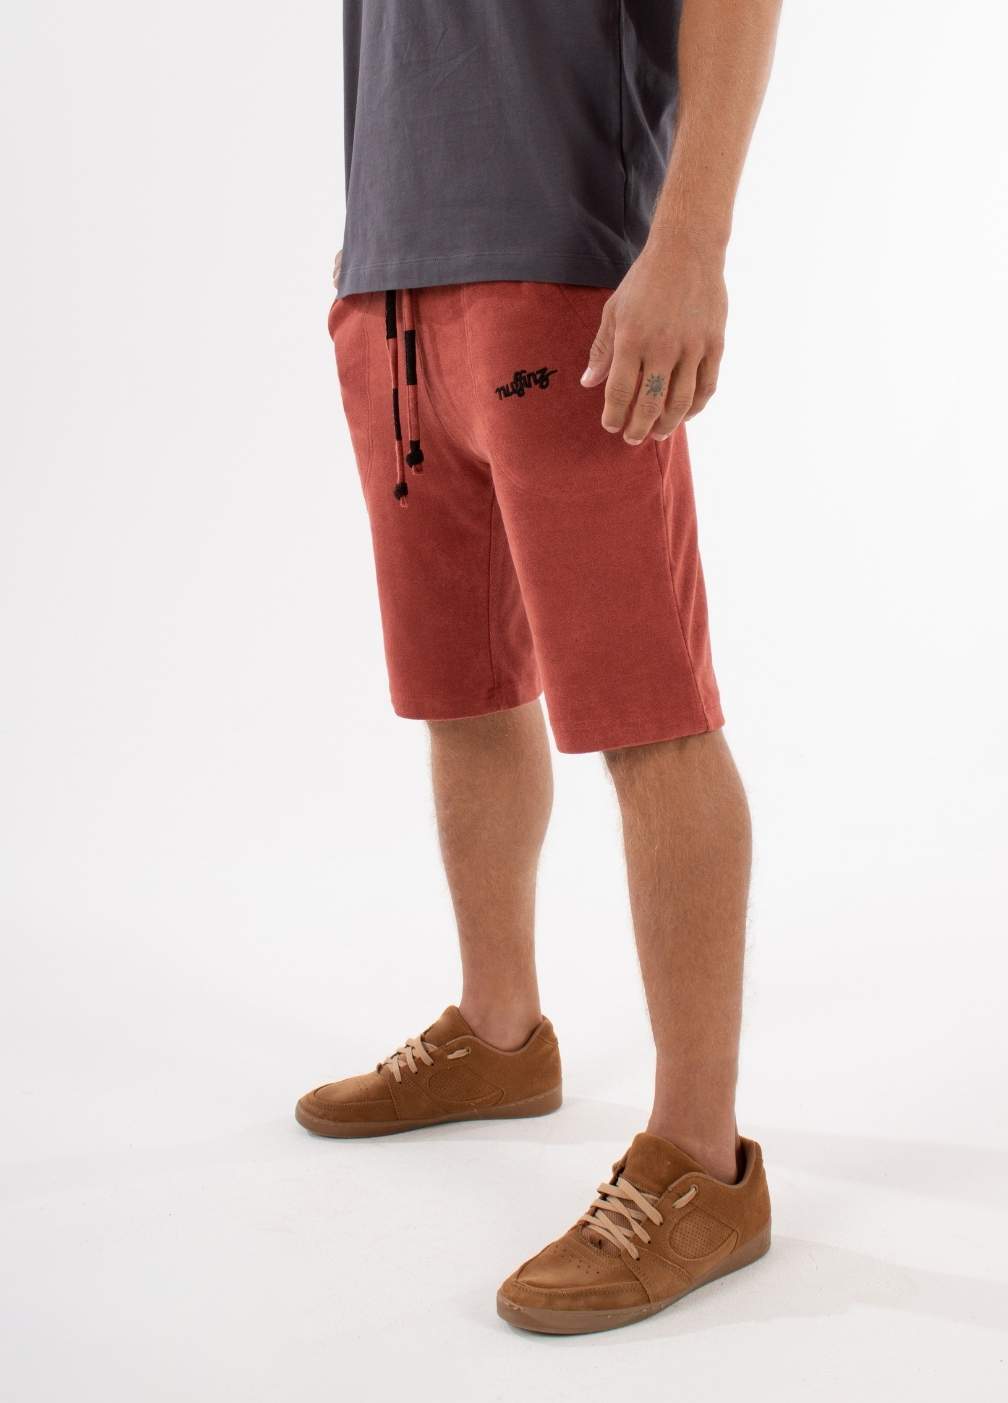 nuffinz shorts - TANDOORI SPICE TOWEL SHORTS - 100% organic cotton - terry cloth - comfortable shorts for men - closeup side / front